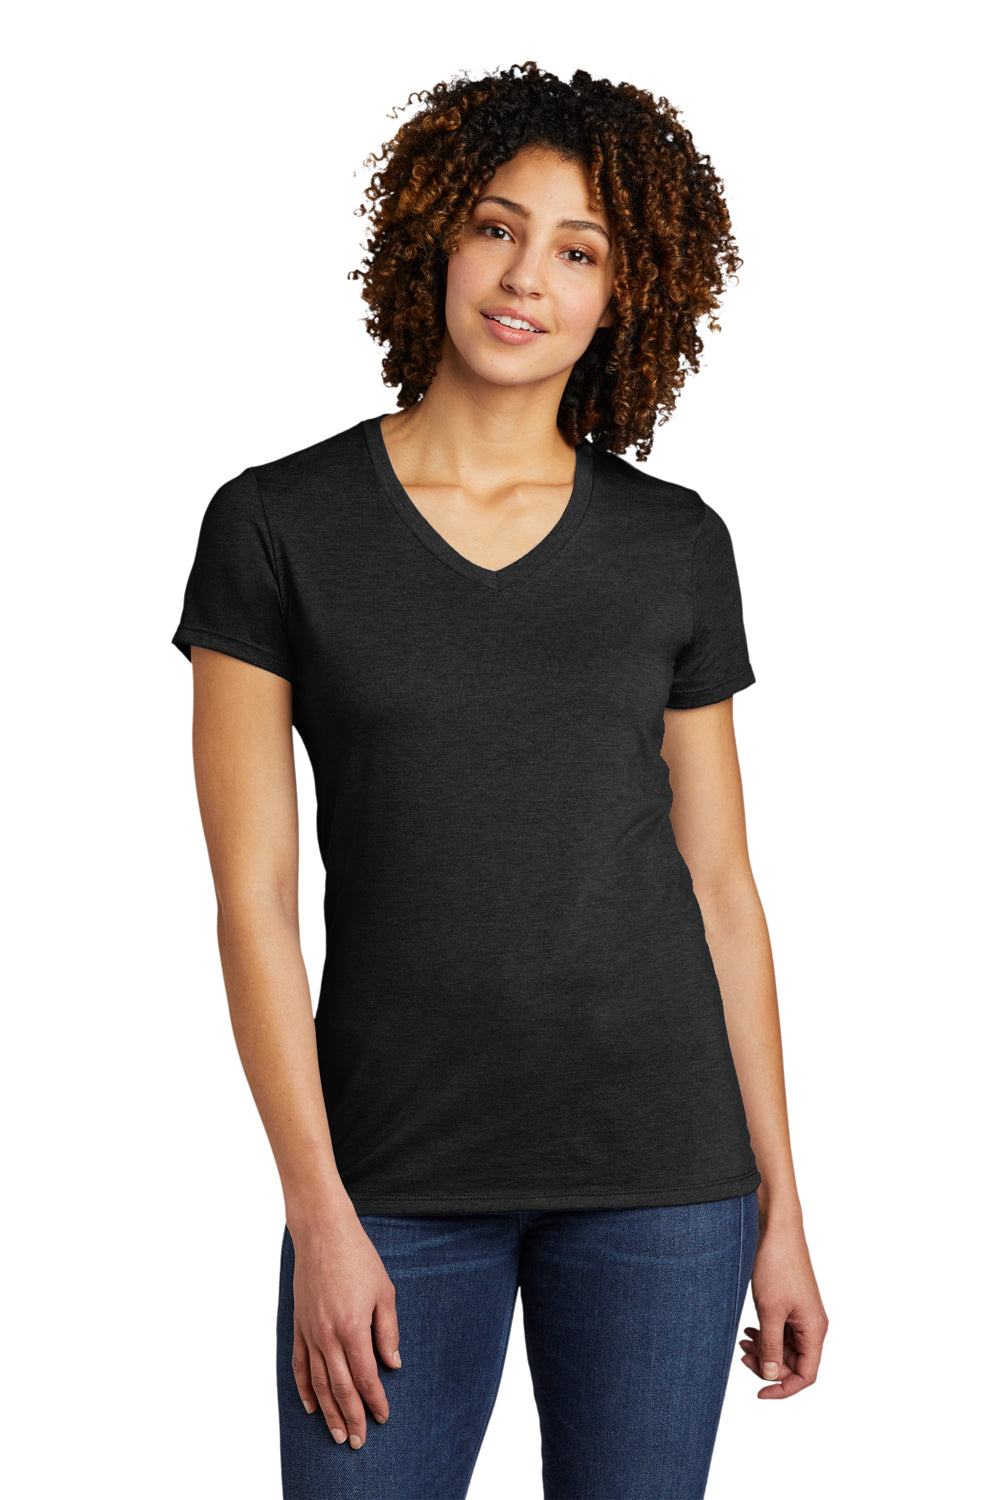 Allmade AL2018 Womens Short Sleeve V-Neck T-Shirt Space Black Model Front